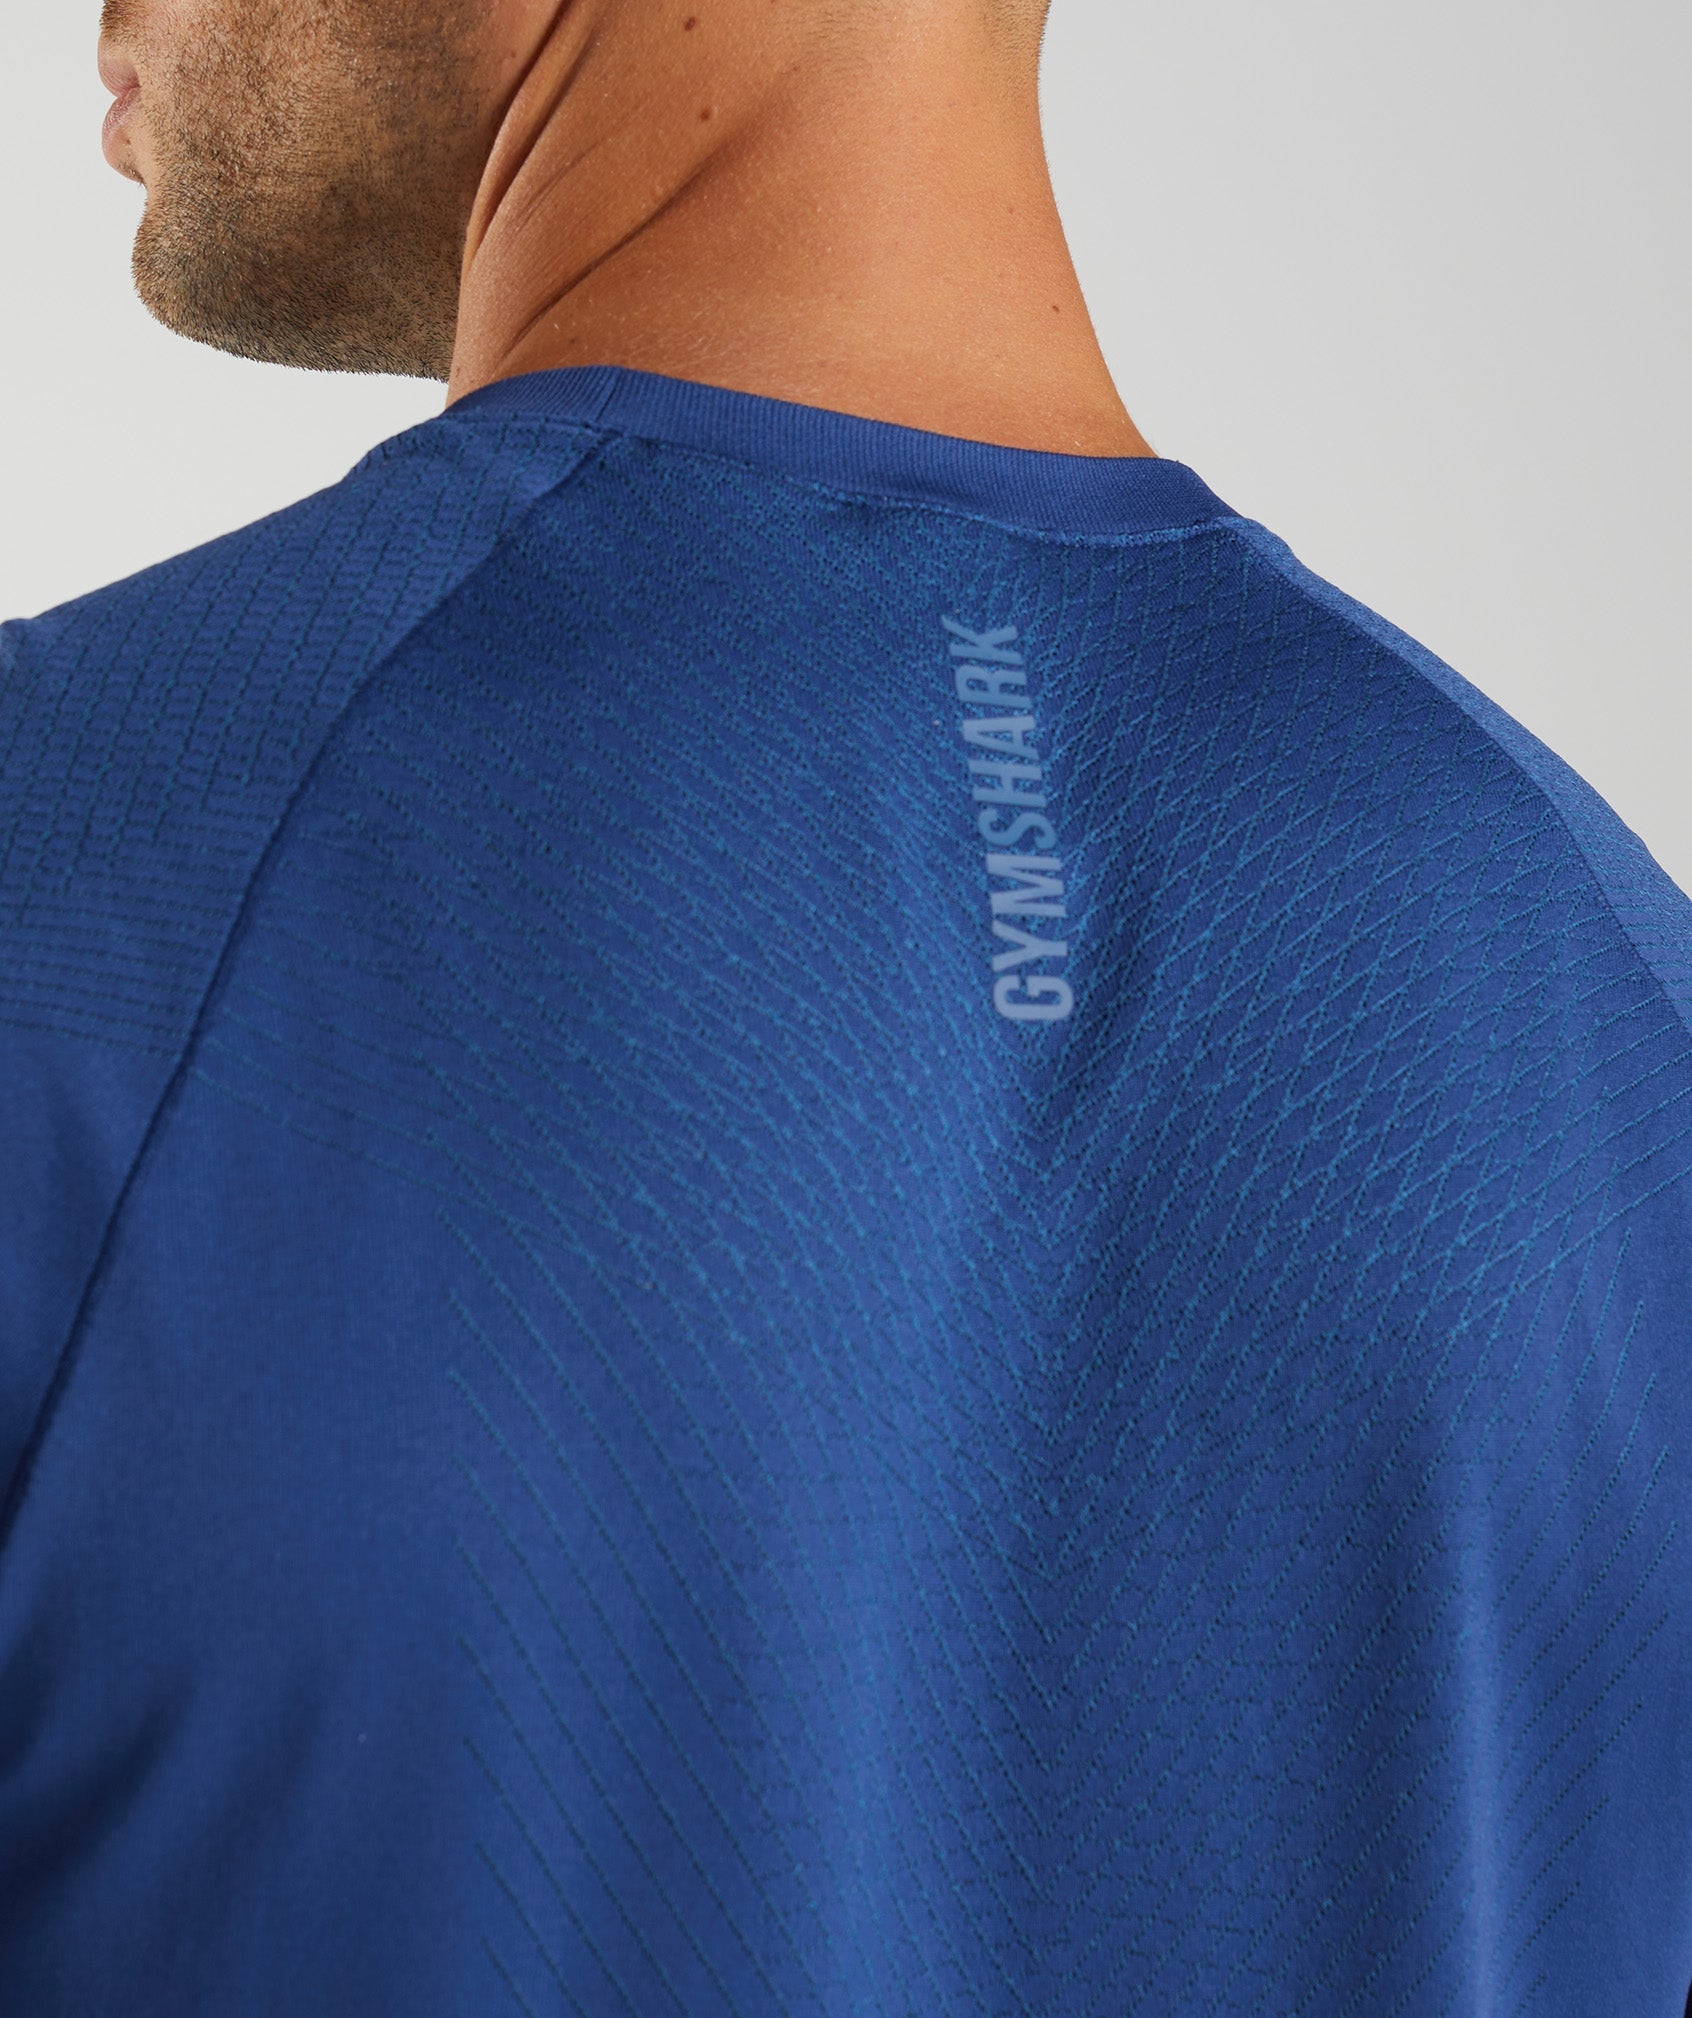 Apex Seamless T-Shirt in Stellar Blue/Lakeside Blue - view 5